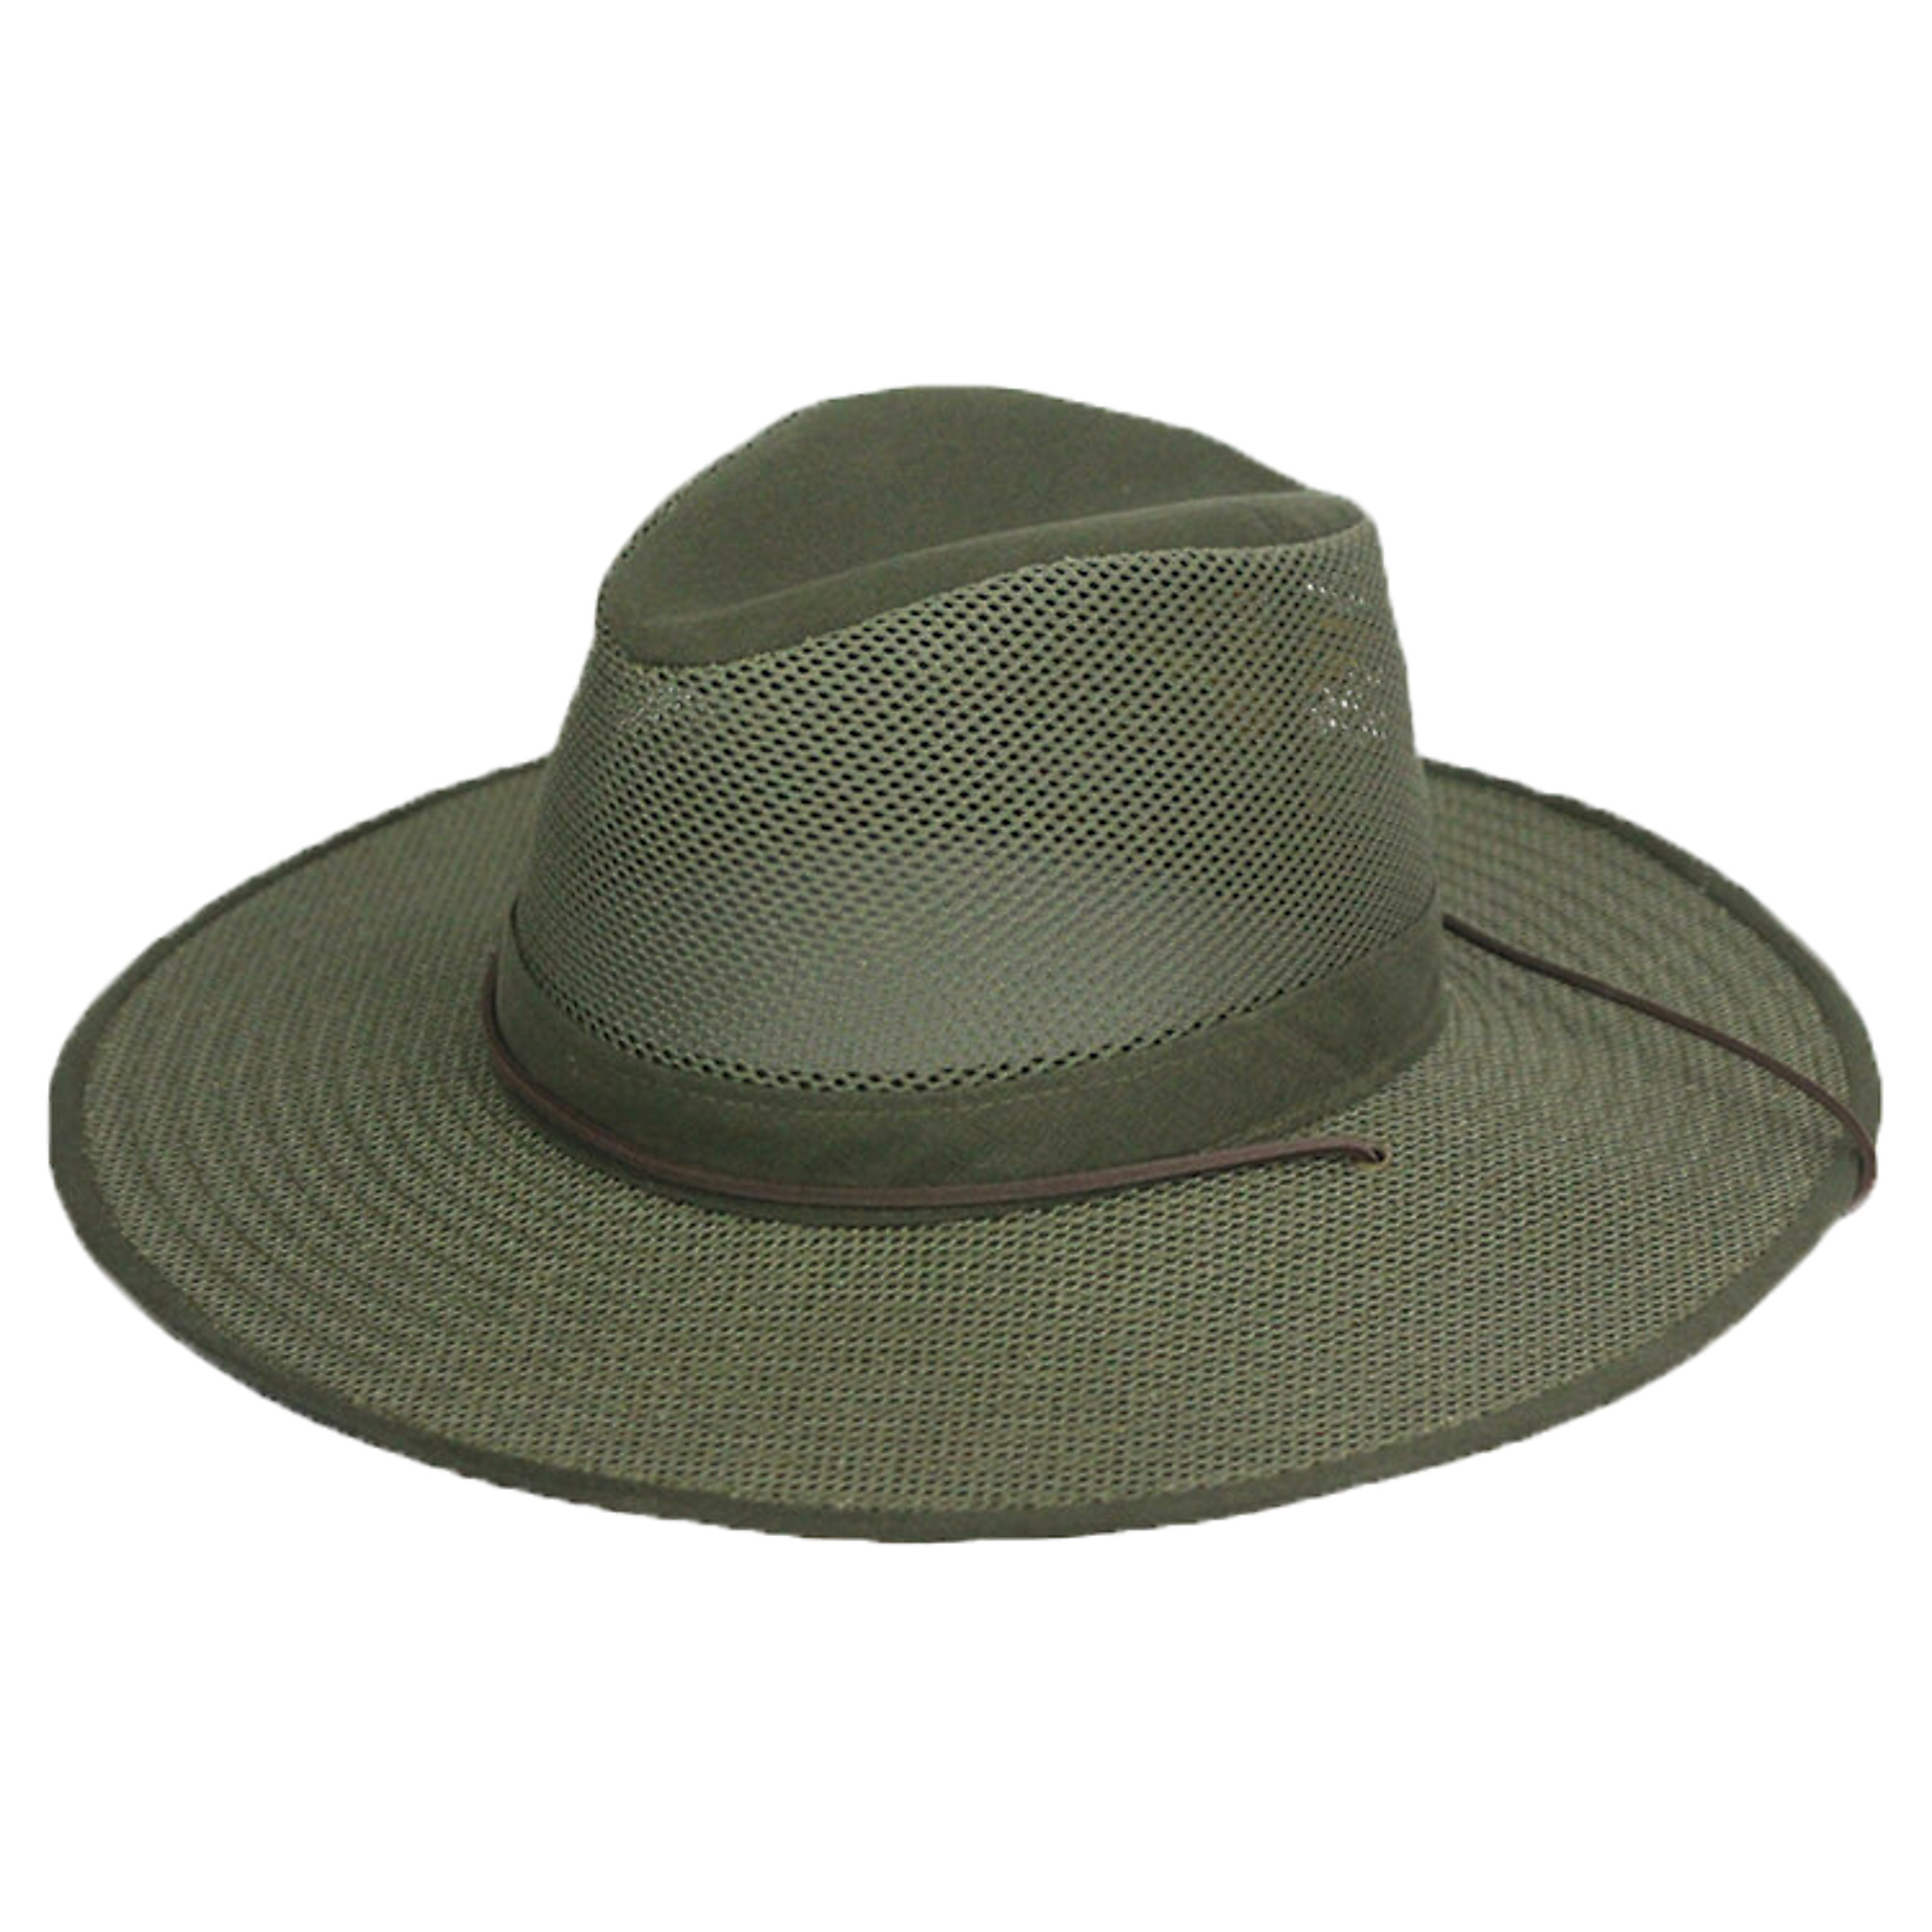 Henschel Hat Company, Olive Aussie Breezer Grande, Size L, Color Olive, Hat Style Hat, Model 5301-36L